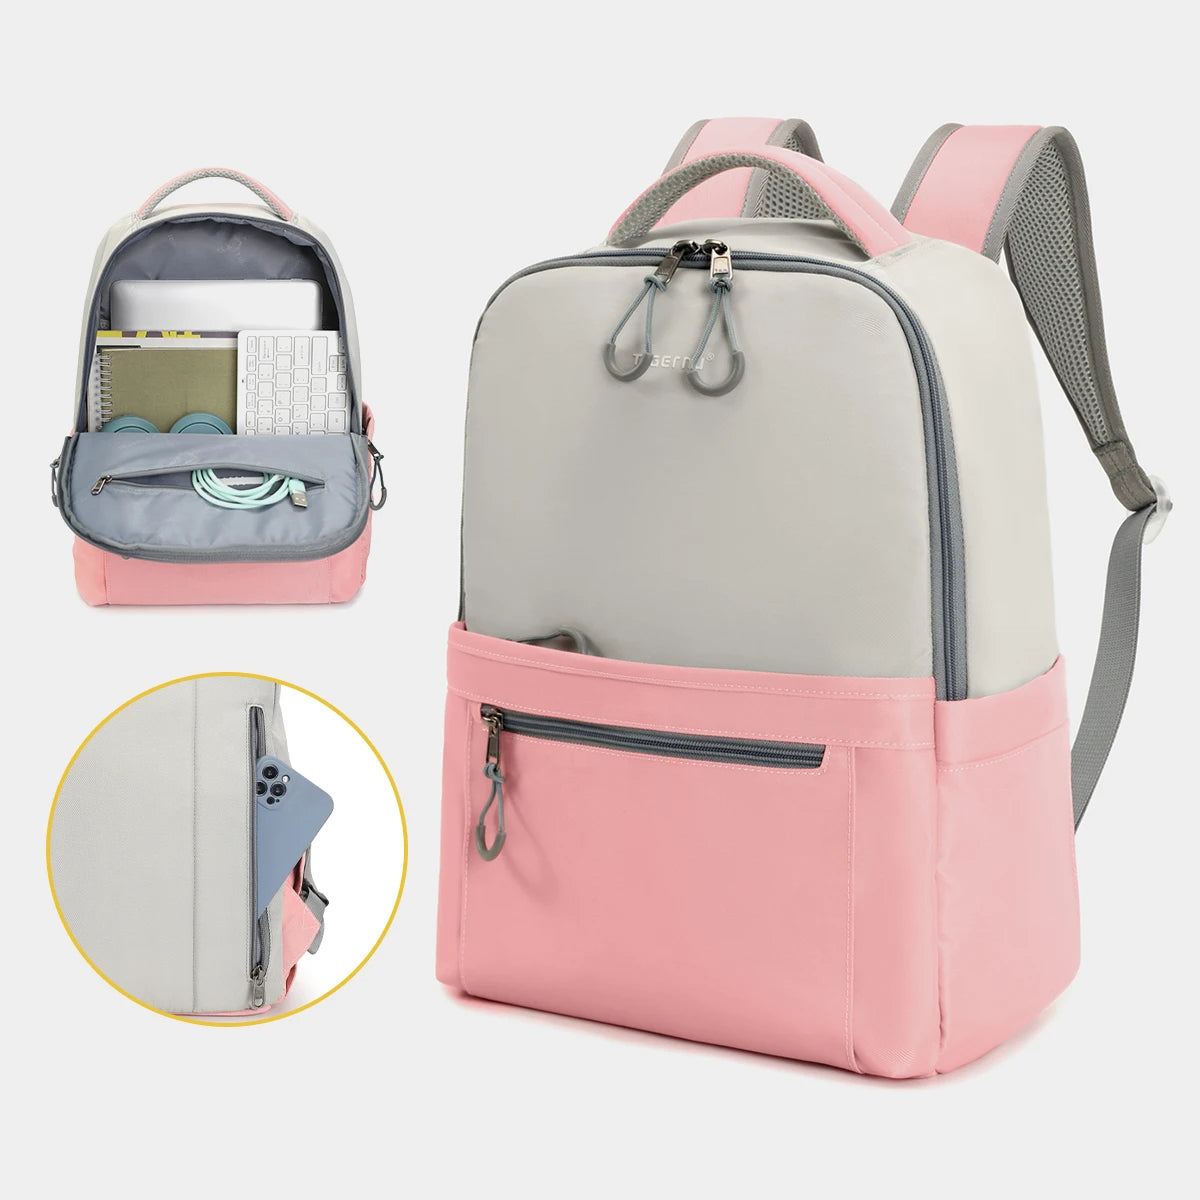 Lifetime Warranty Women Backpack 14-15.6inch Laptop Backpack School Bag Pink